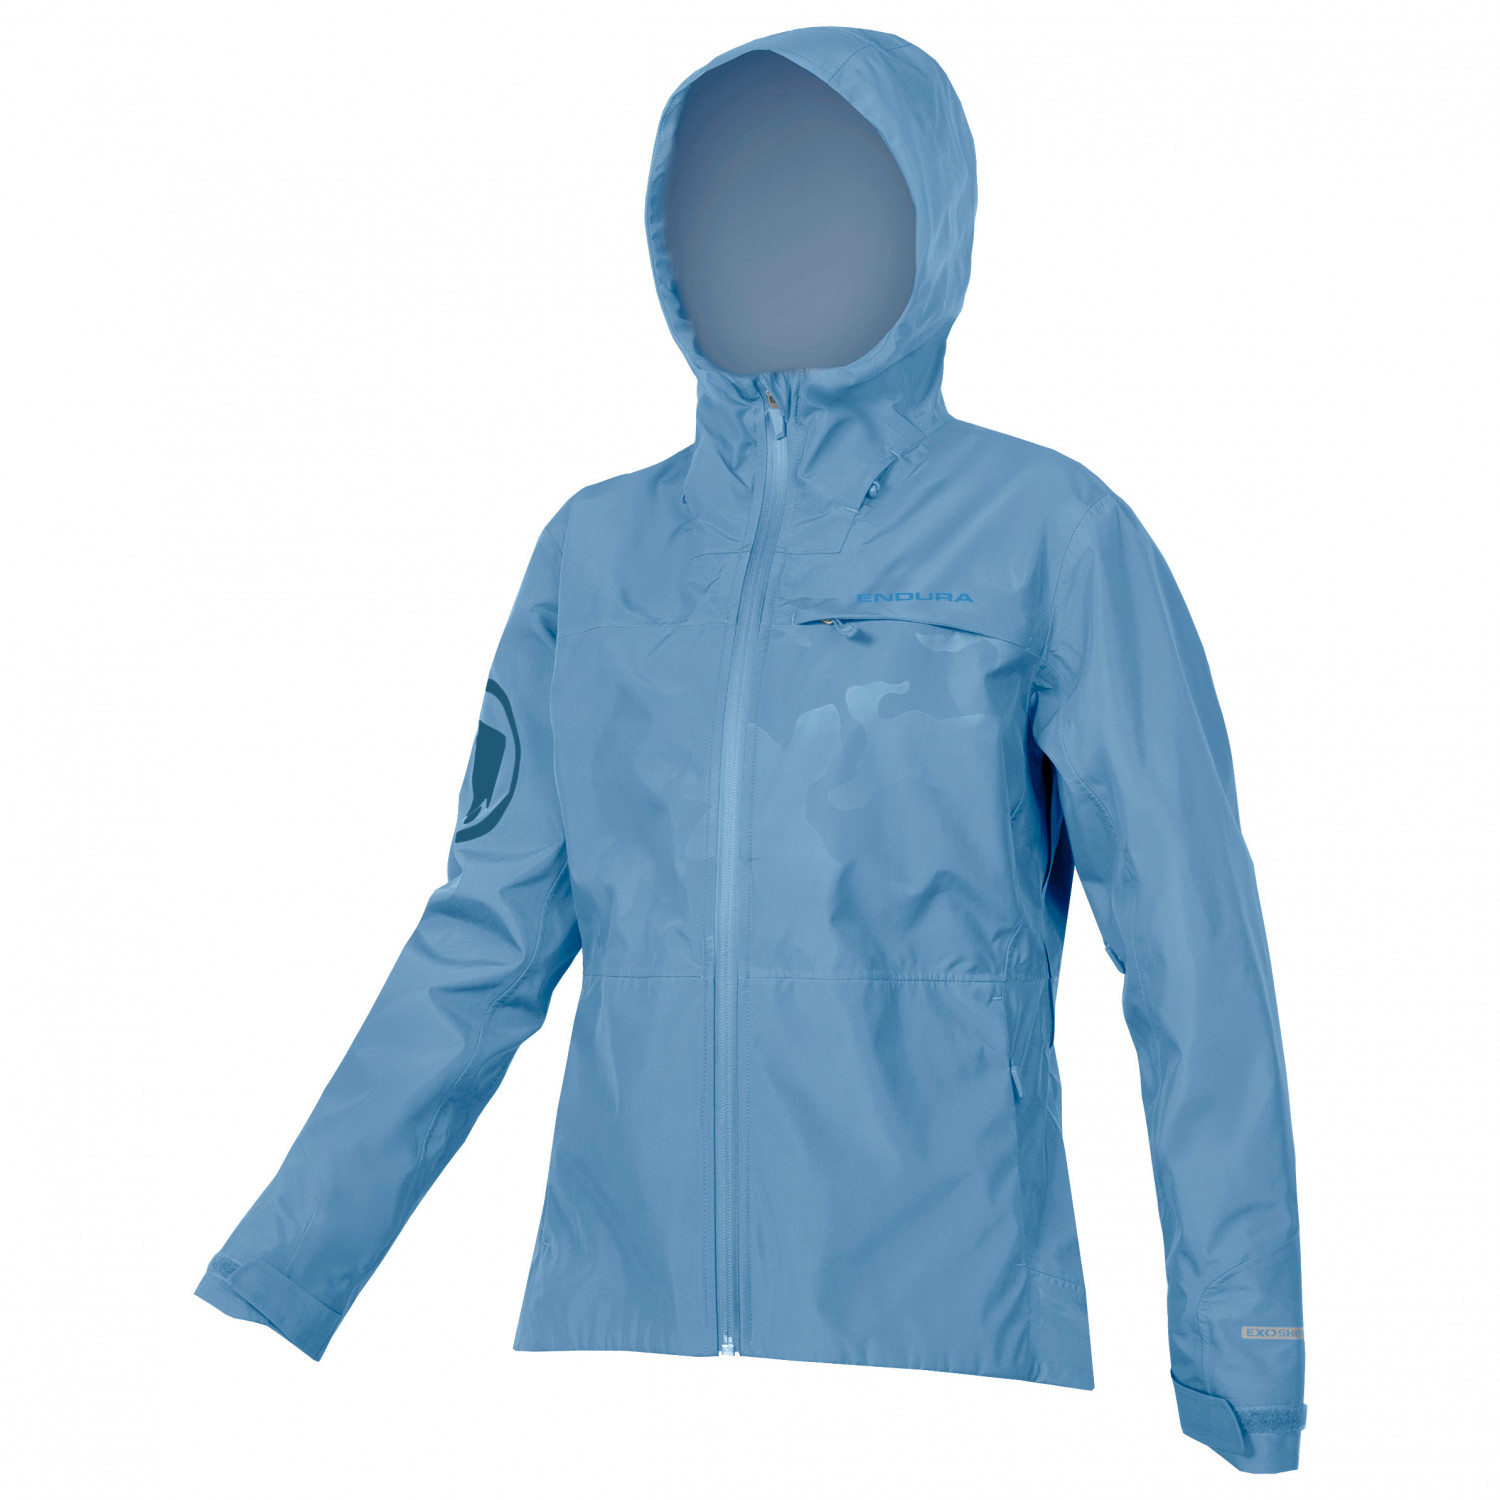 Велосипедная куртка Endura Women's Singletrack Jacke II, цвет Bluesteel цена и фото